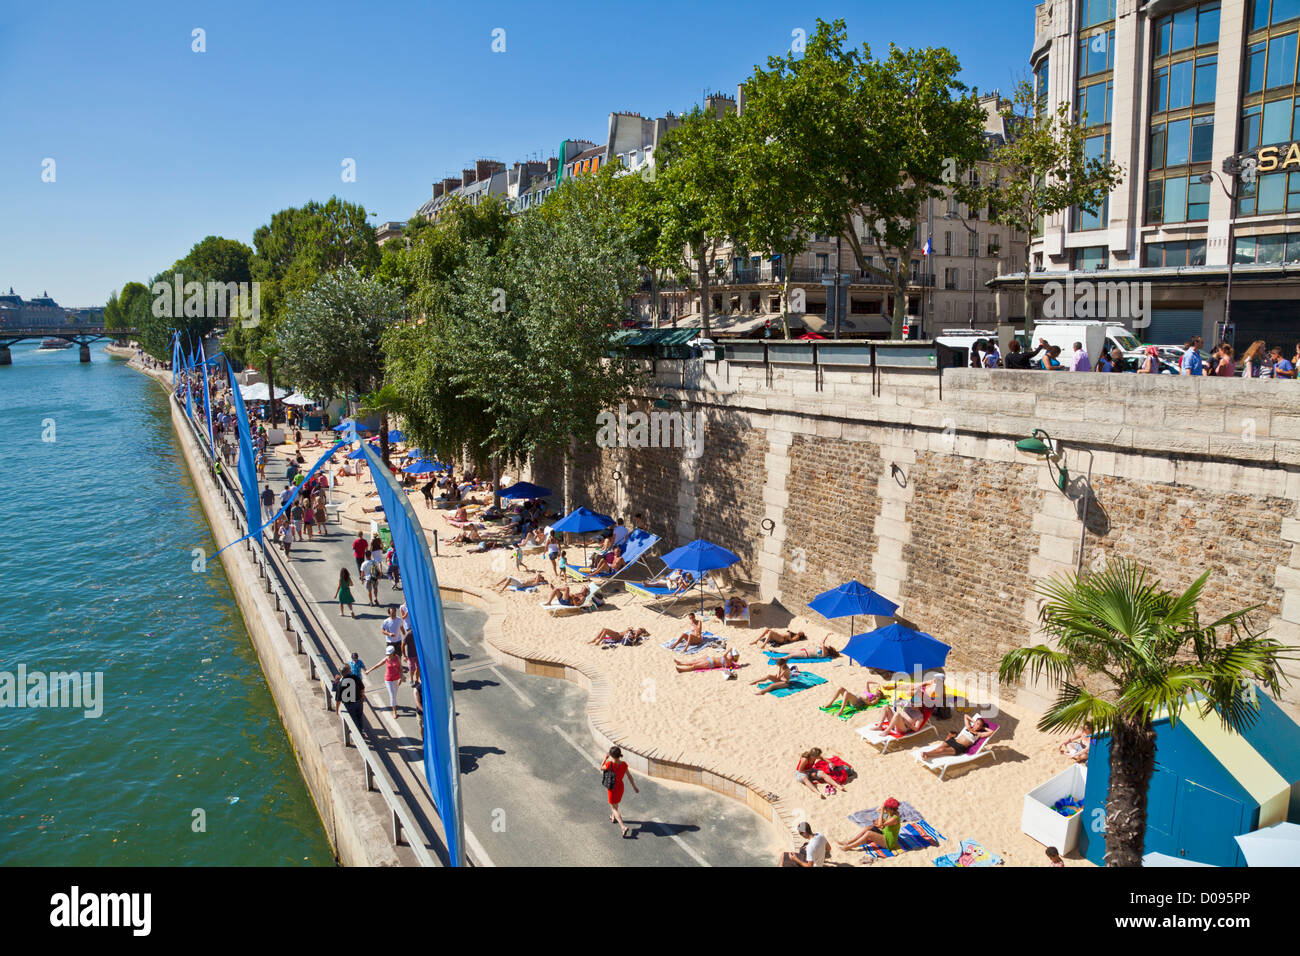 Paris plage or paris beach at the side of the River Seine Paris France EU Europe Stock Photo